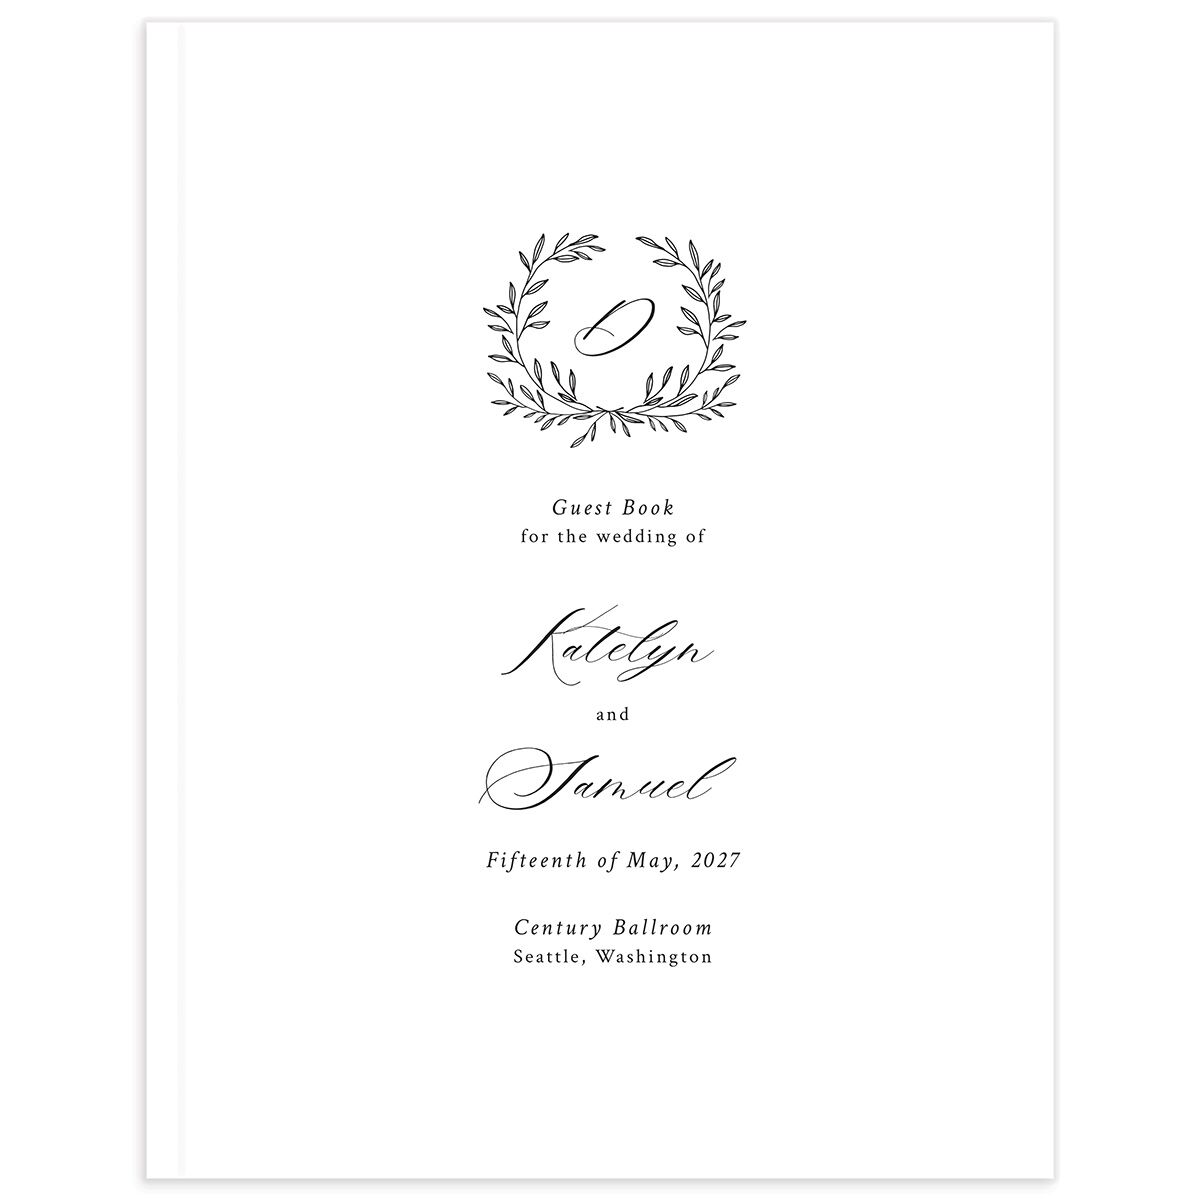 Monogram Wreath Wedding Guest Book